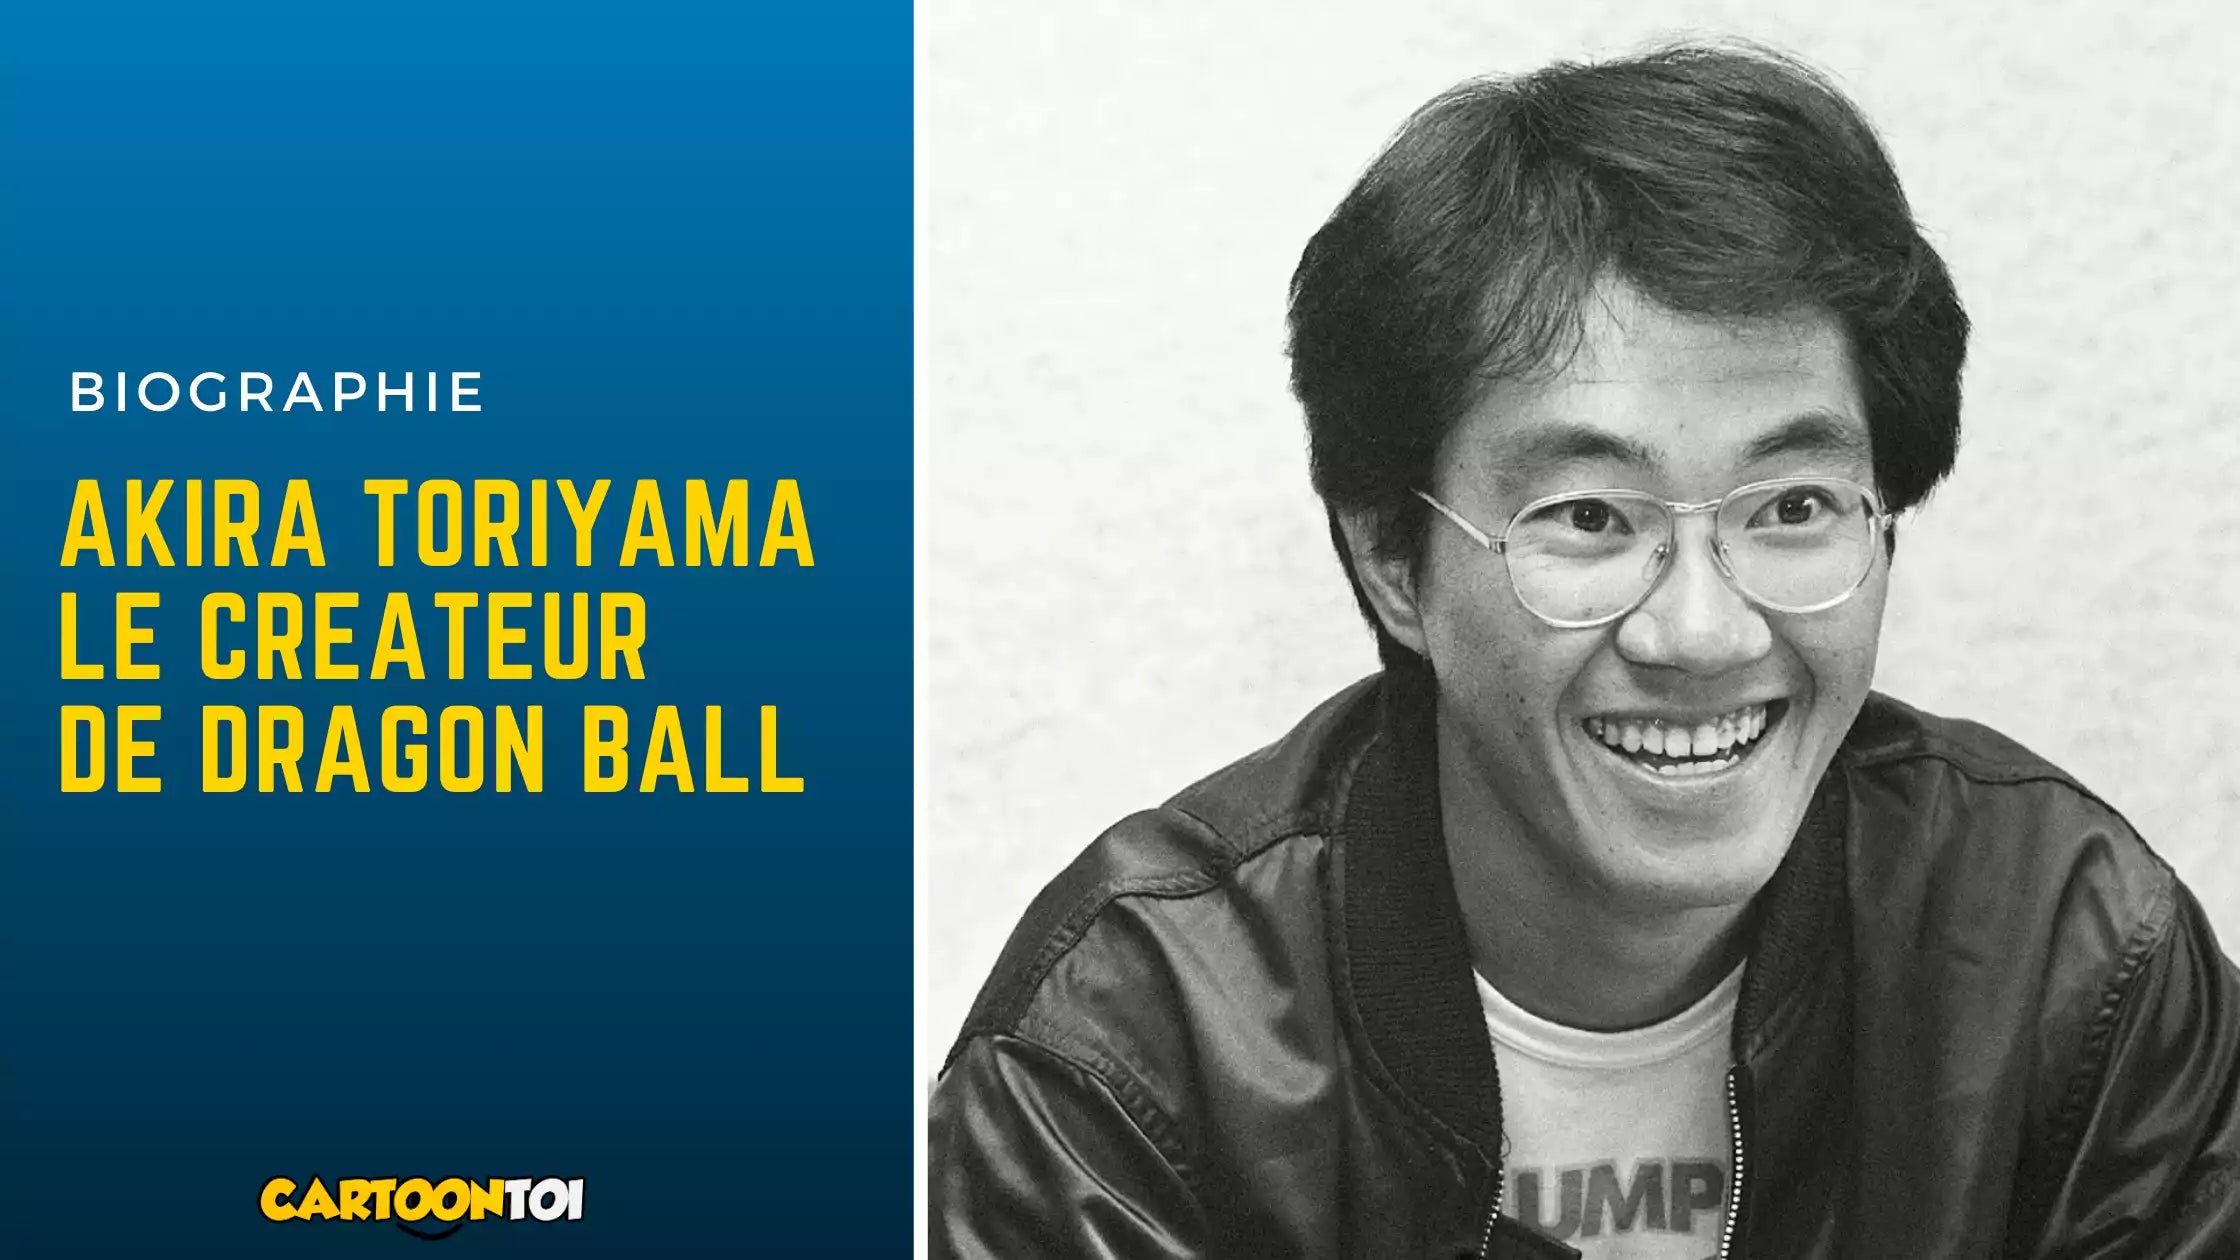 Akira toriyama le createur de Dragon ball